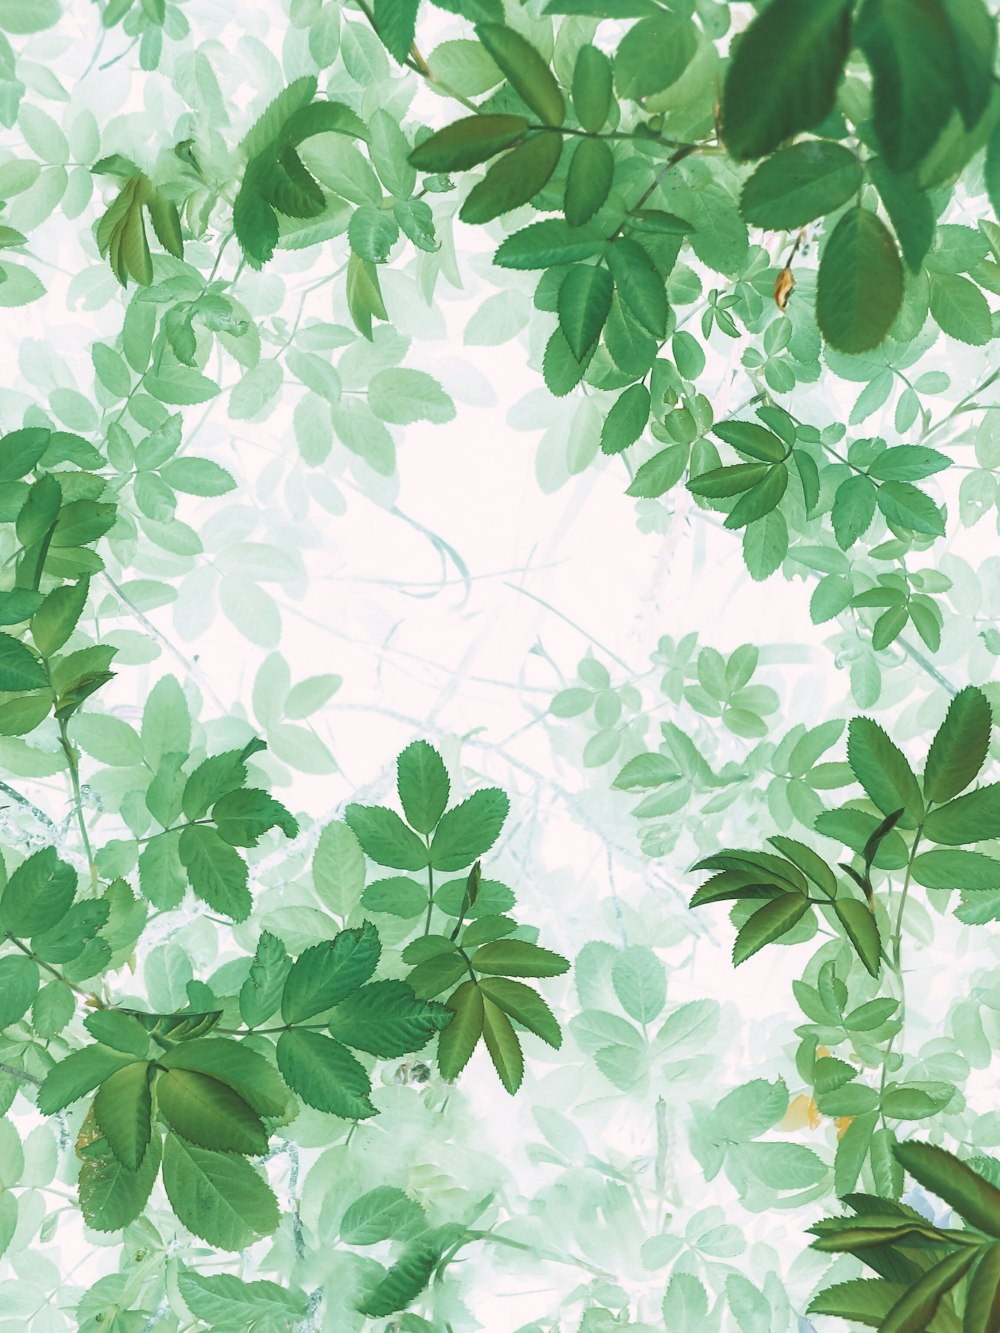 hojas verdes sobre fondo blanco